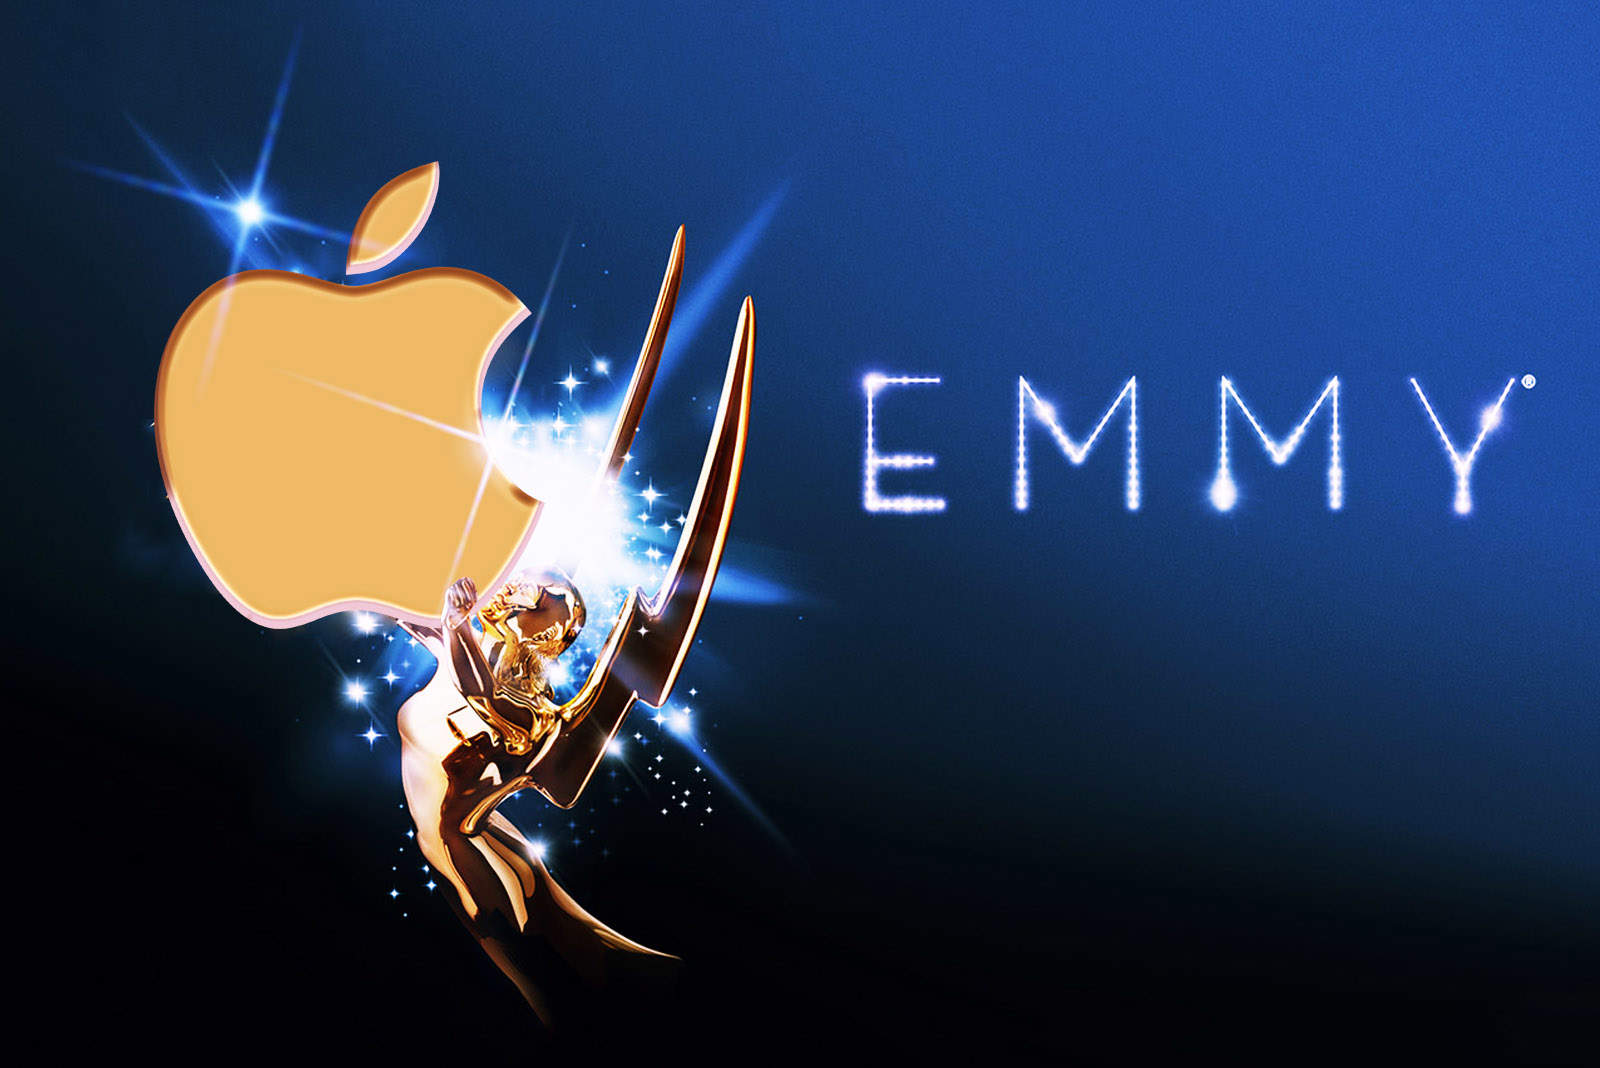 FireWire lands Apple its first Emmy.